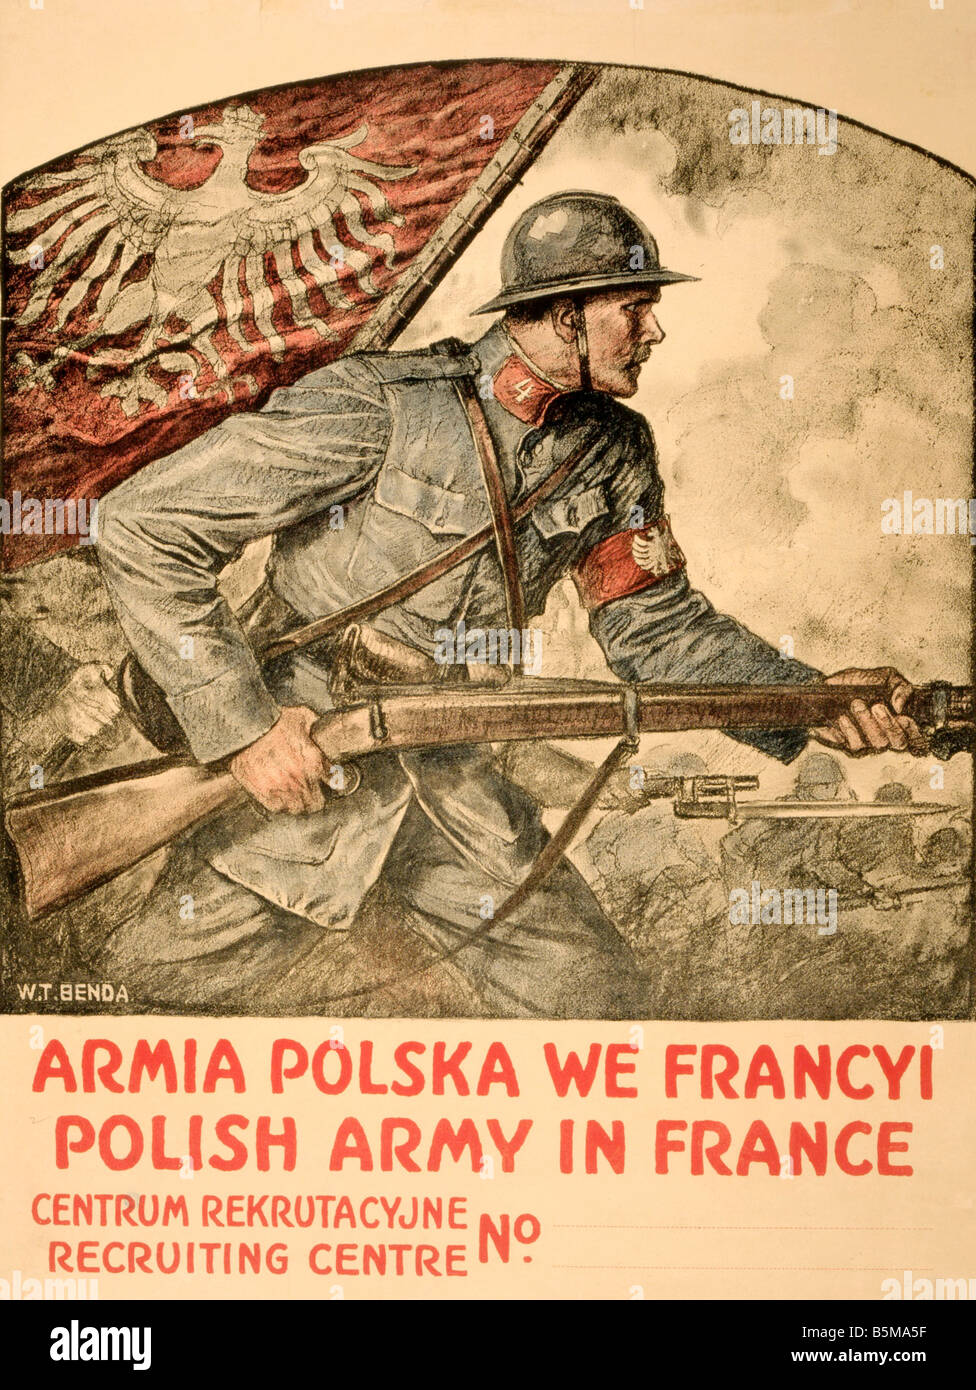 2 G55 P1 1917 64 WW I USA Recruiting Poster 1917 History World War I Propaganda Armia Polska we Francyi Polish Army in France pr Stock Photo